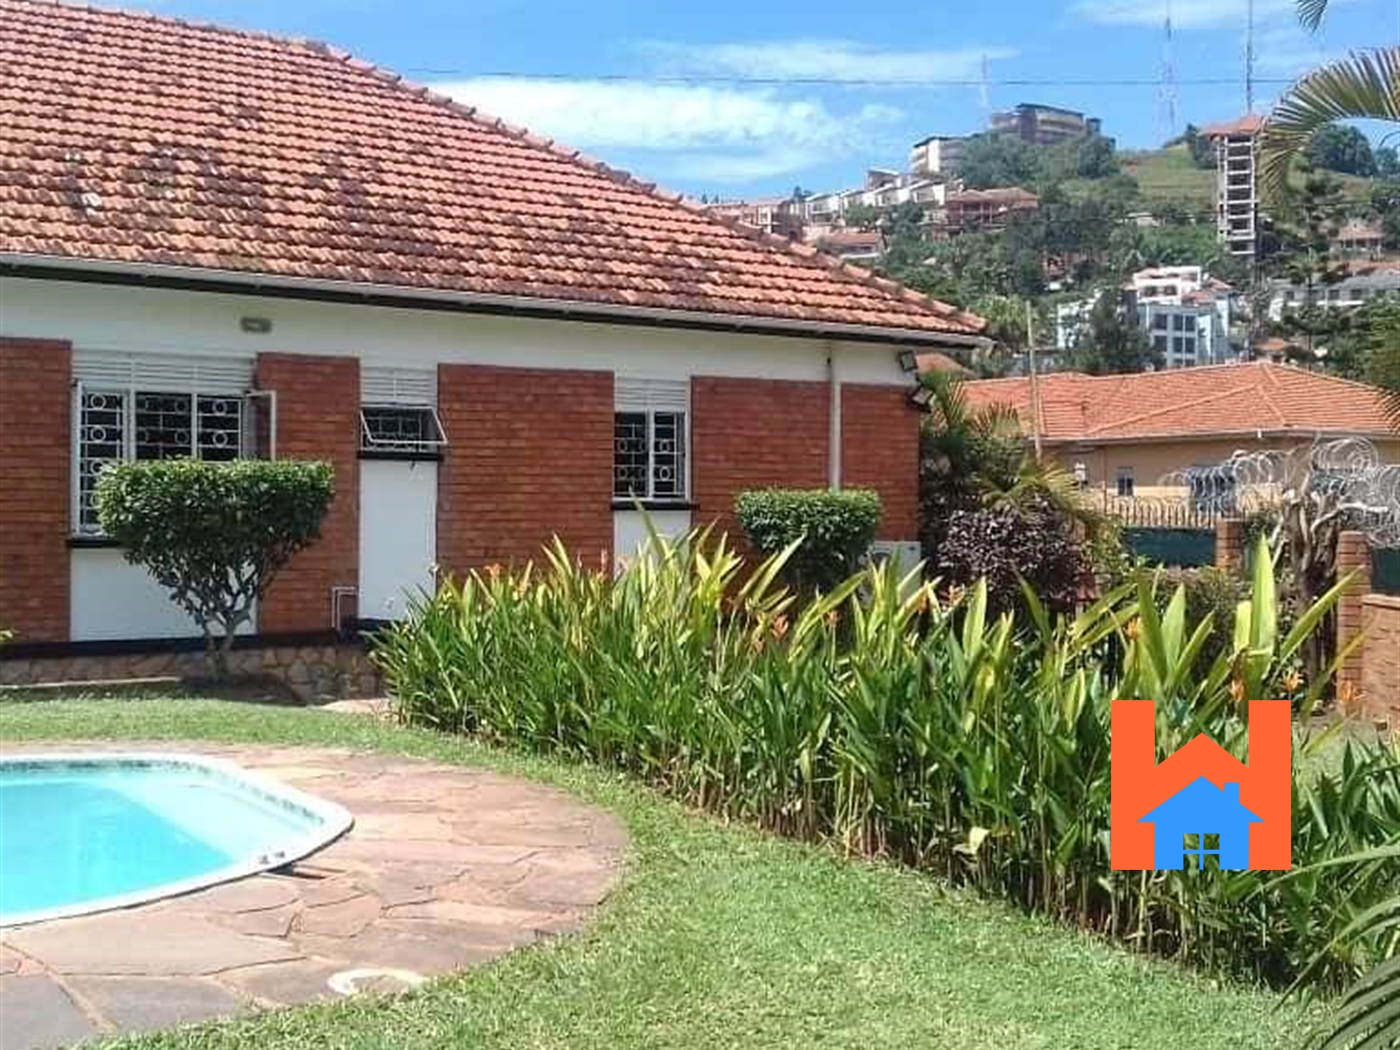 3 Bedroom House For Rent In Naguru Kampala Uganda Code 02 10 22